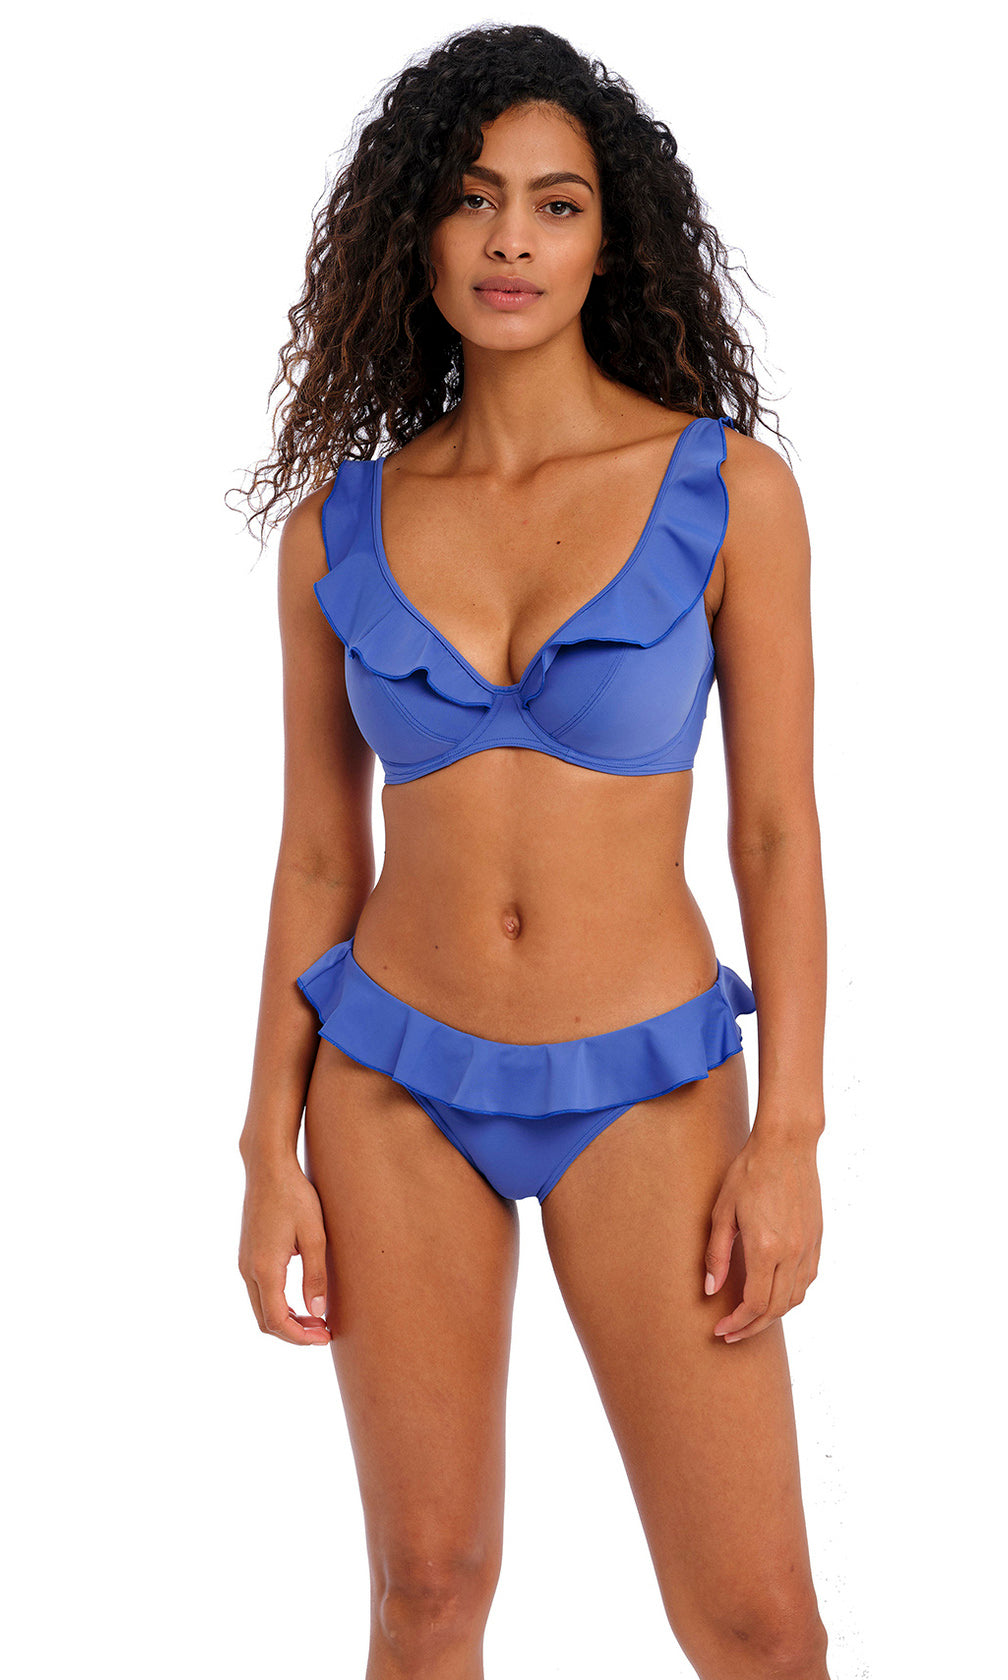 Jewel Cove Plain Azure UW High Apex Bikini Top, Special Order D Cup to J Cup